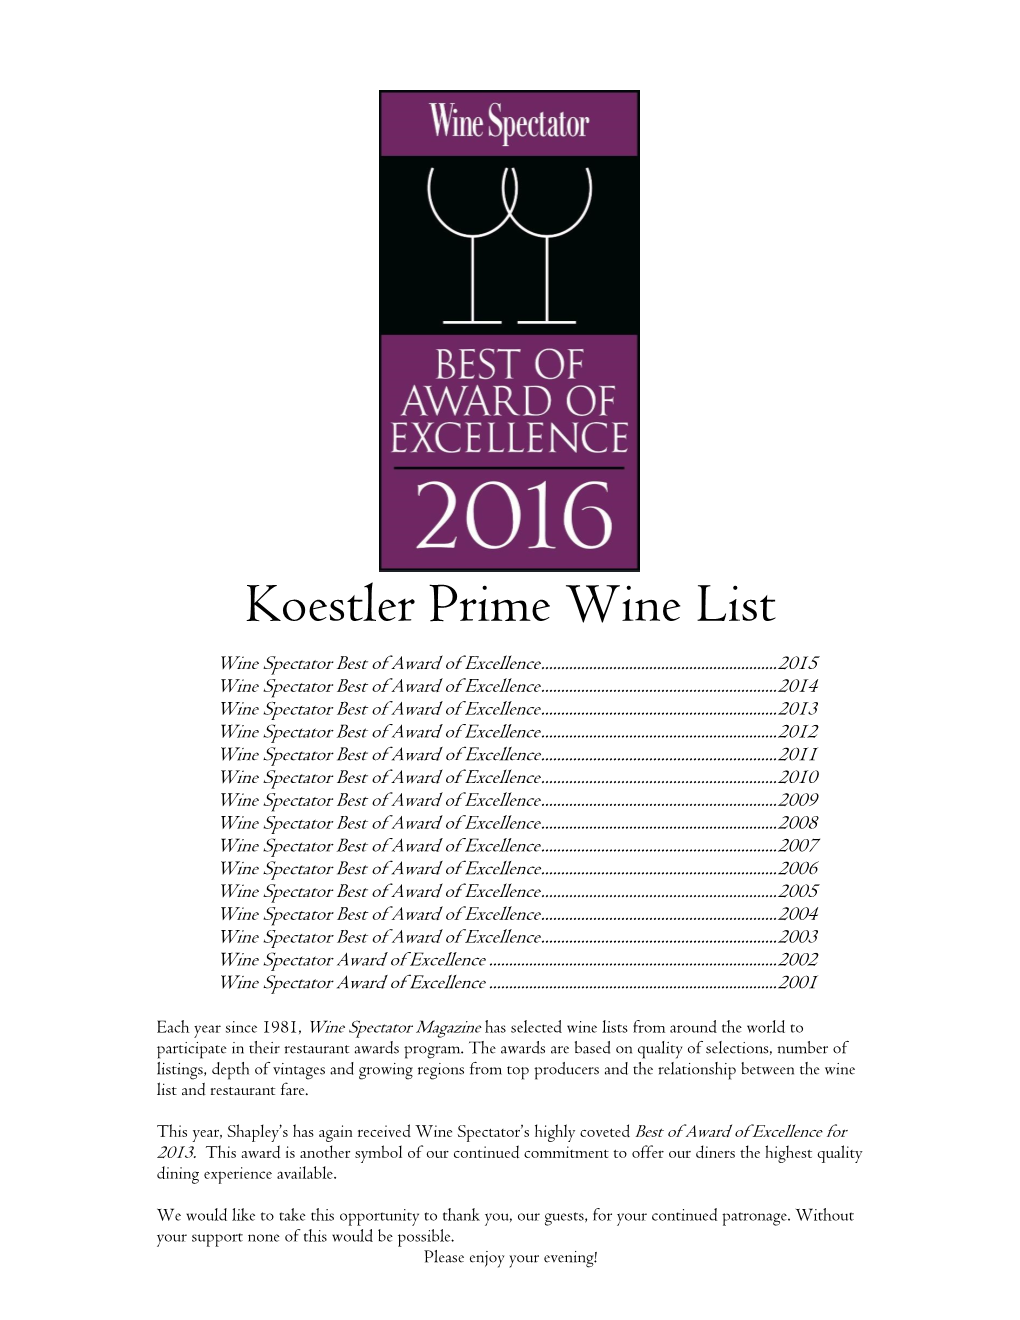 Koestler Prime Wine List